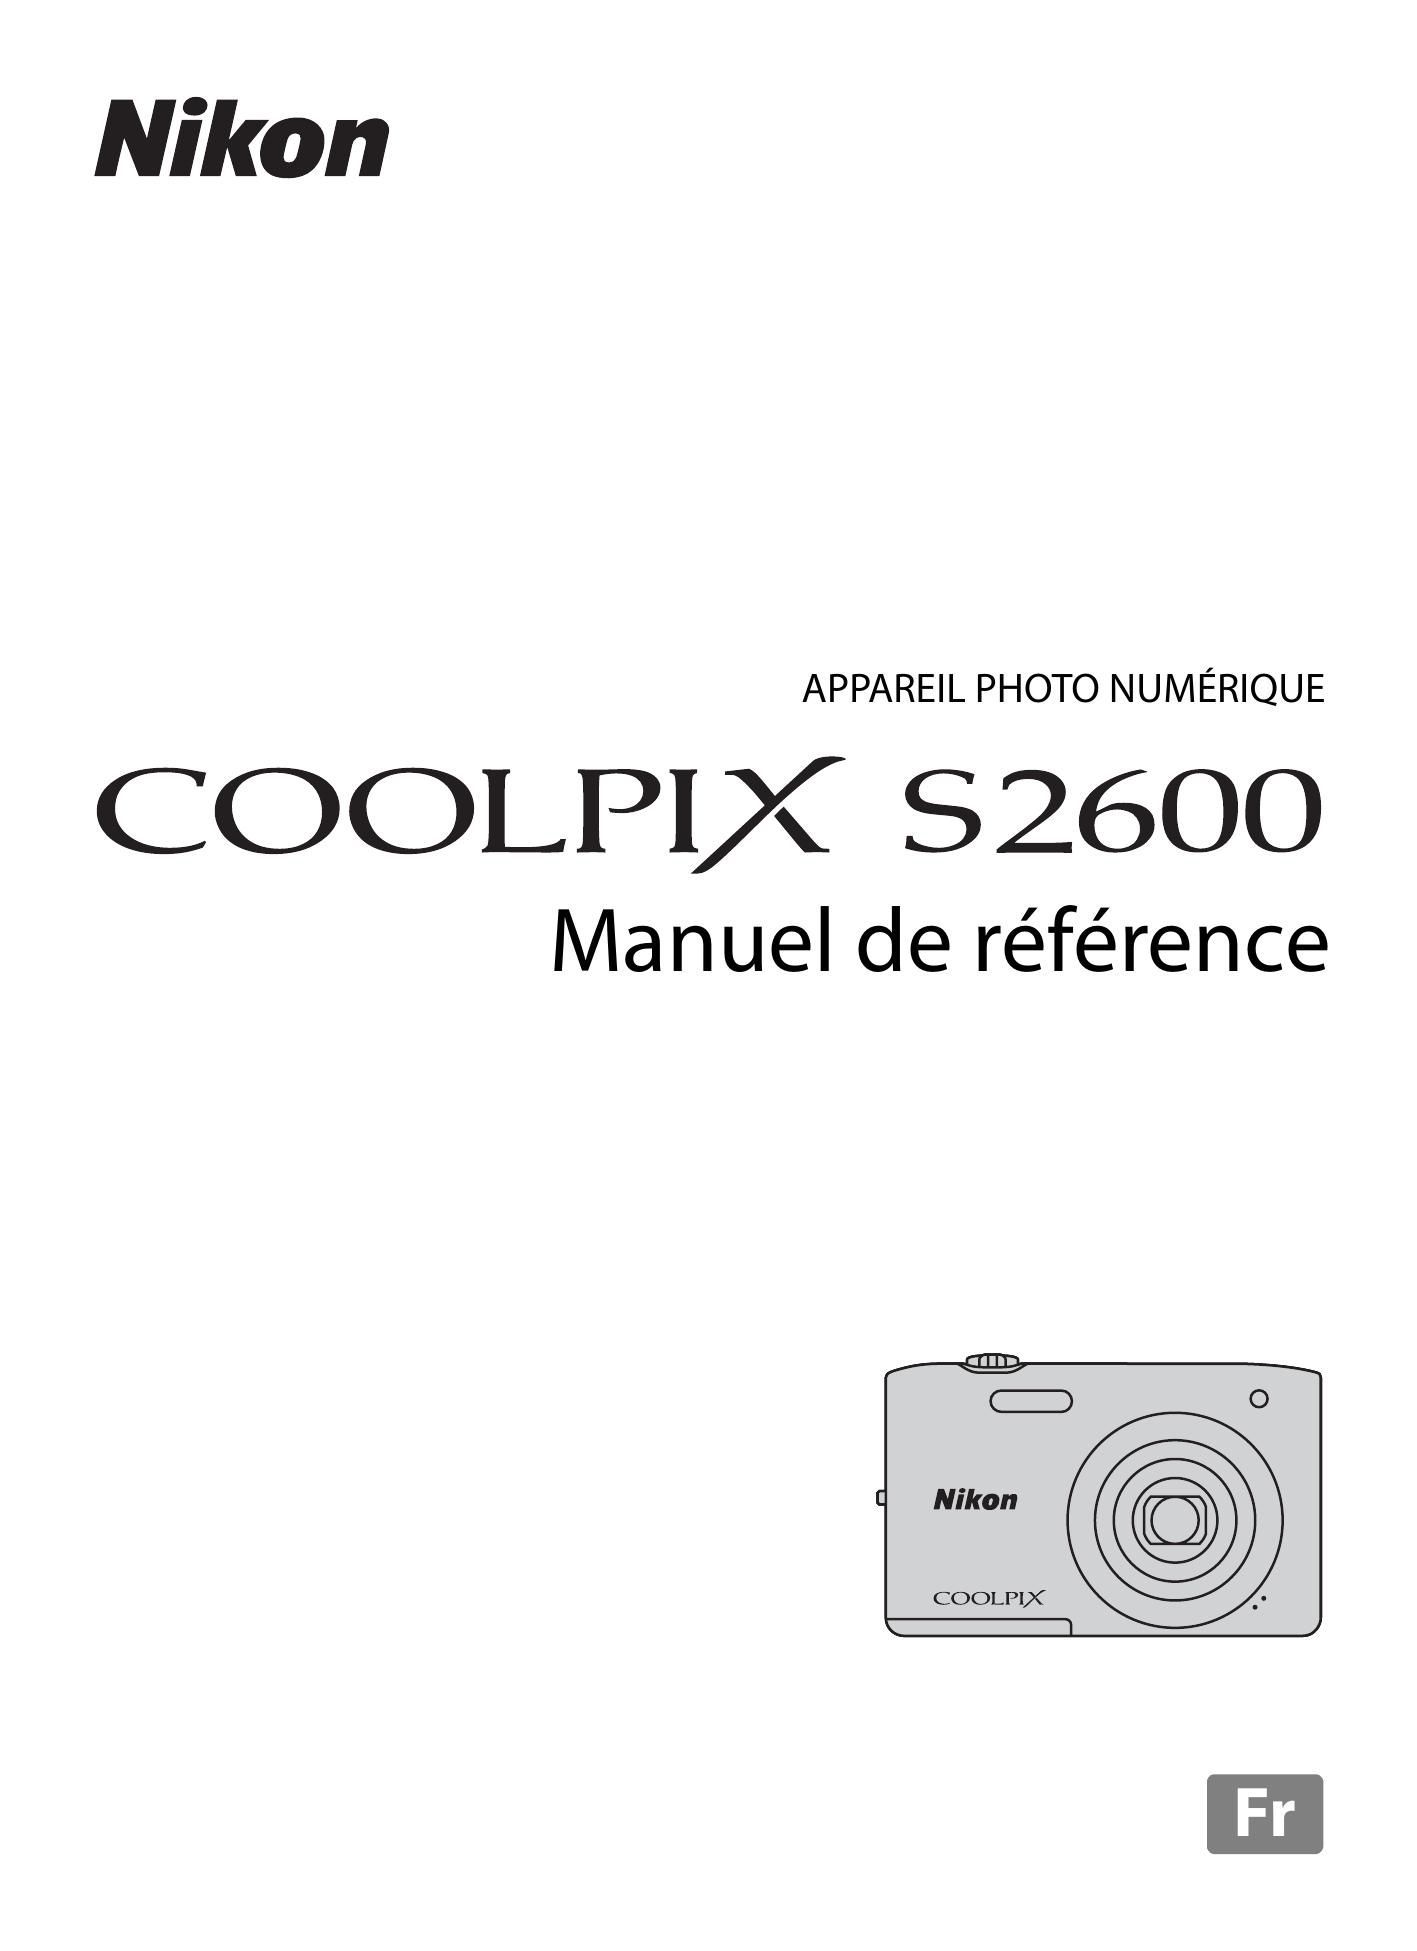 Nikon COOLPIX S2600 Camcorder User Manual